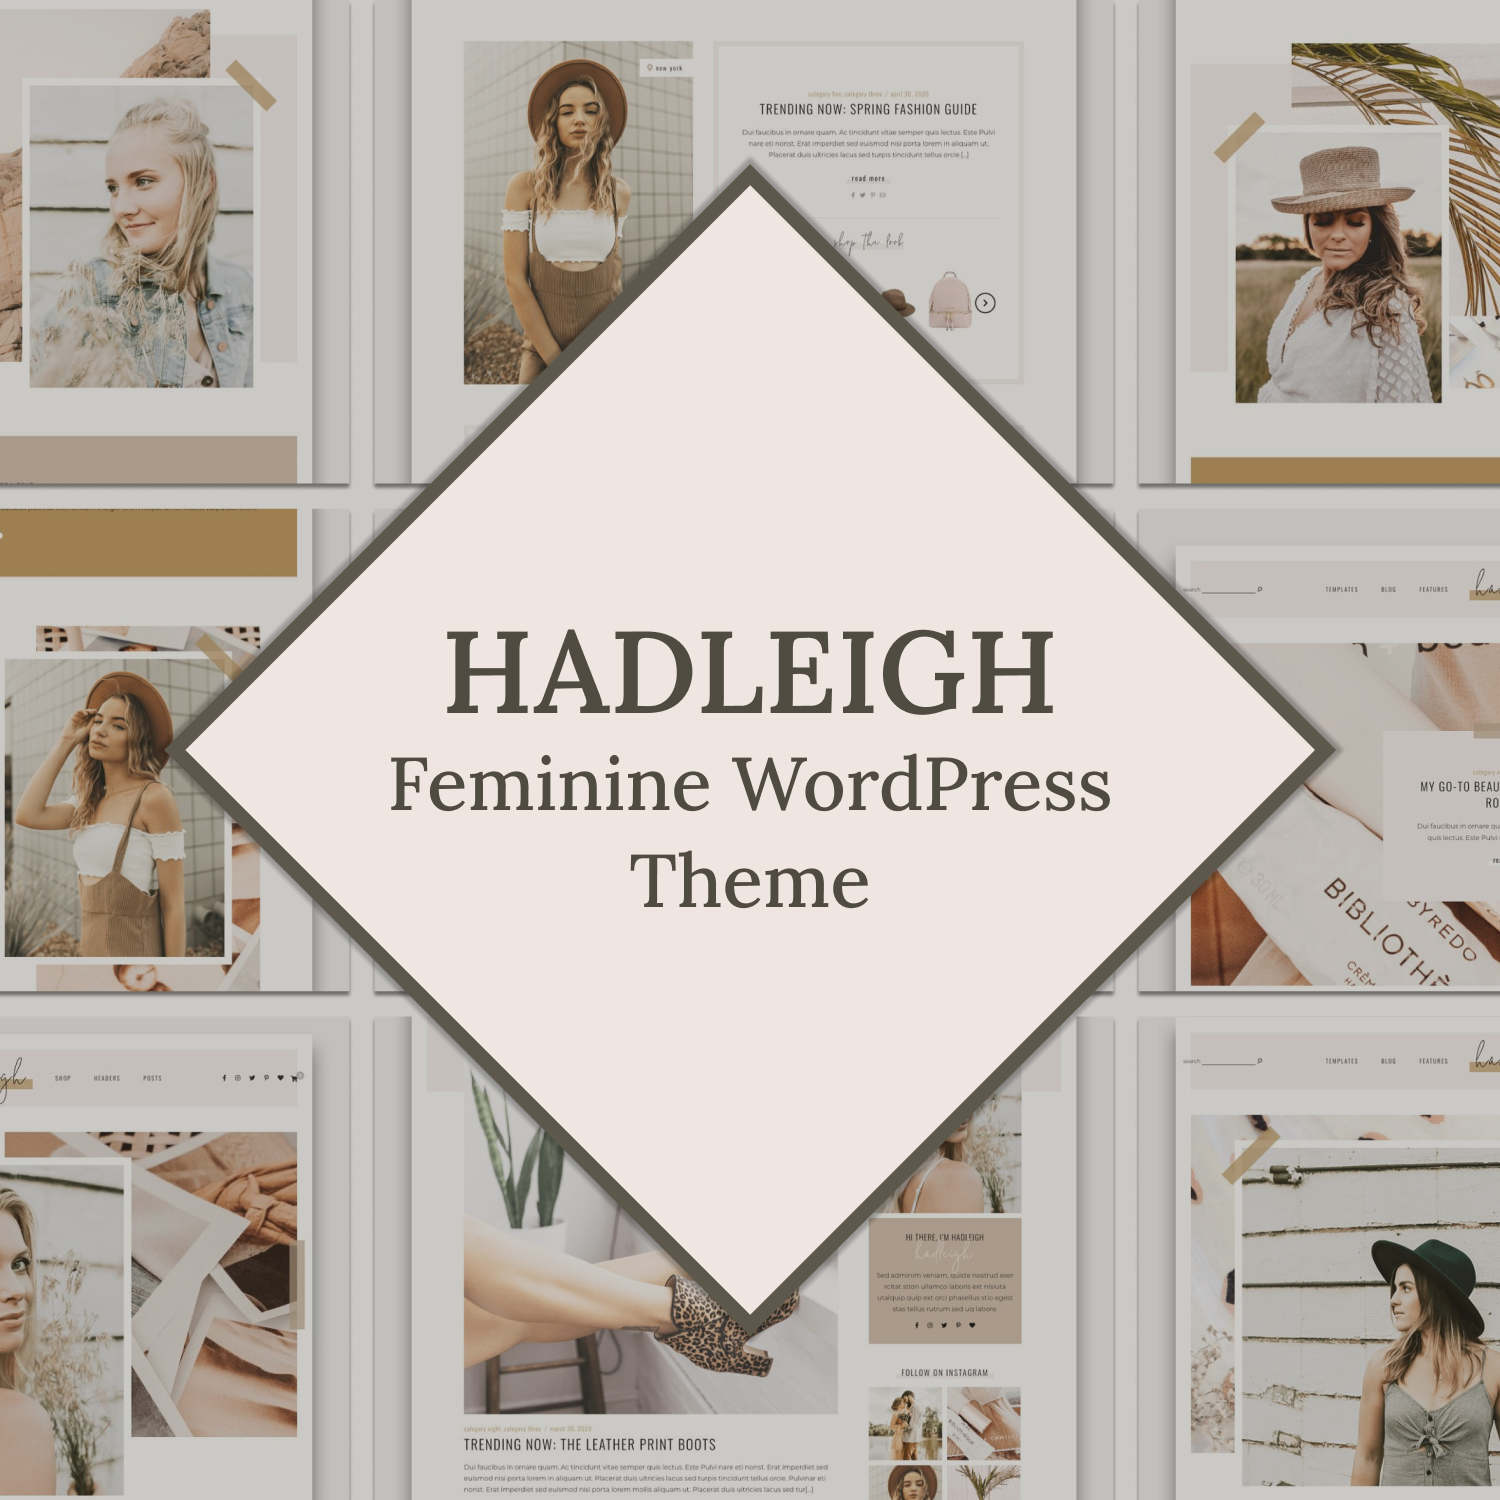 Preview hadleigh feminine wordpress theme.